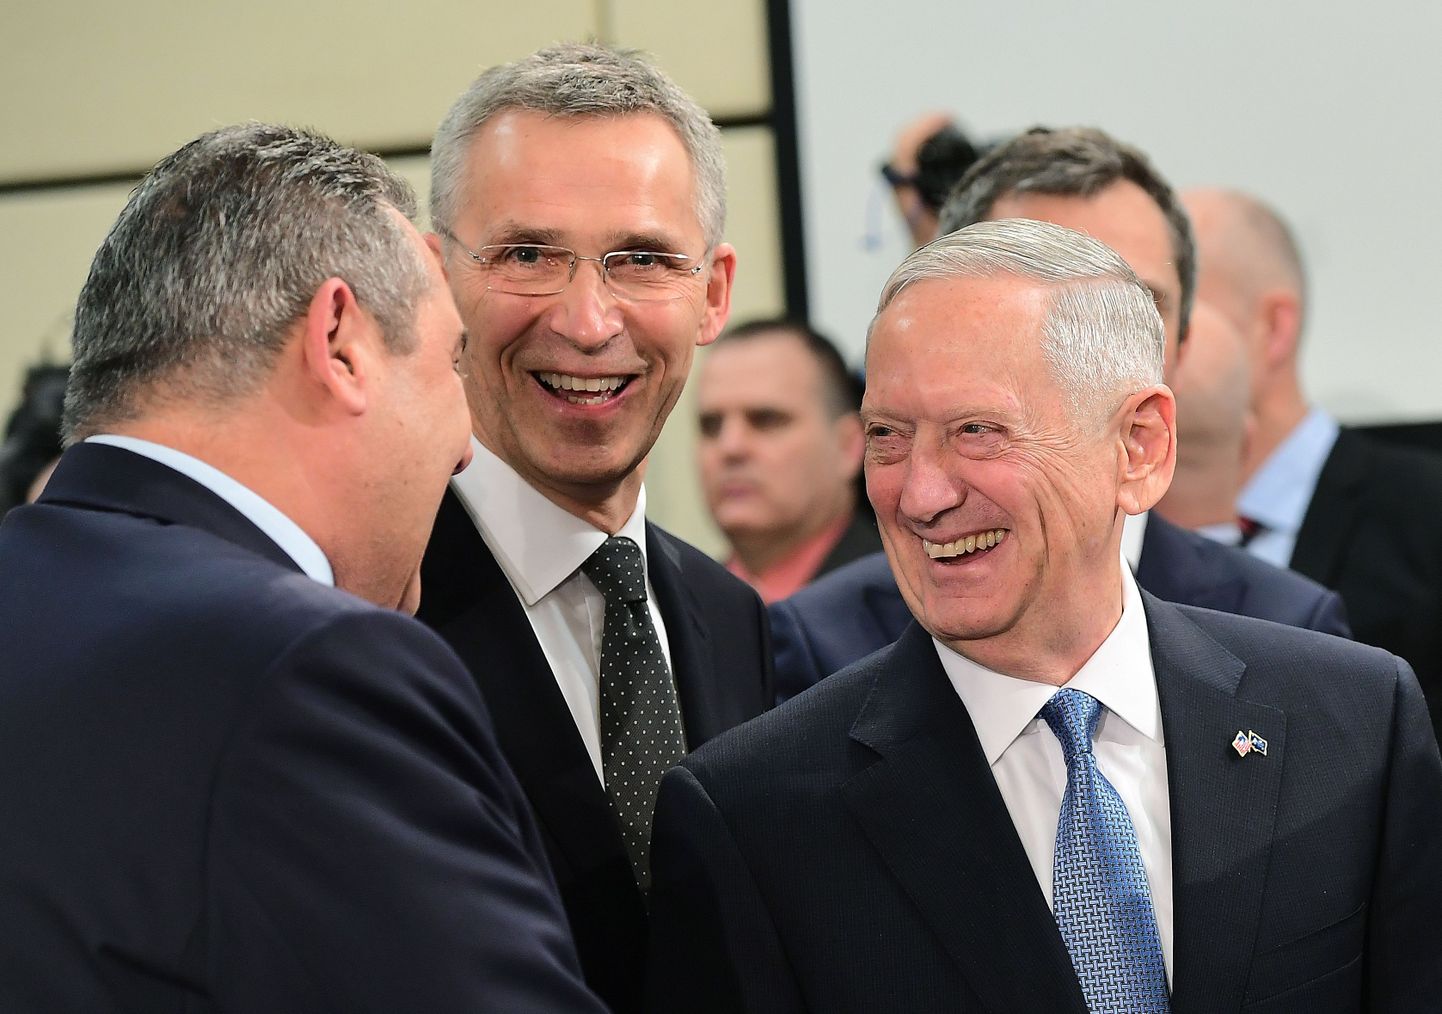 Kreeka kaitseminister Panos Kammenos, NATO peasekretär Jens Stoltenberg ja USA kaitseminister James Mattis kohtumise avapäeva esimese sessiooni eel.